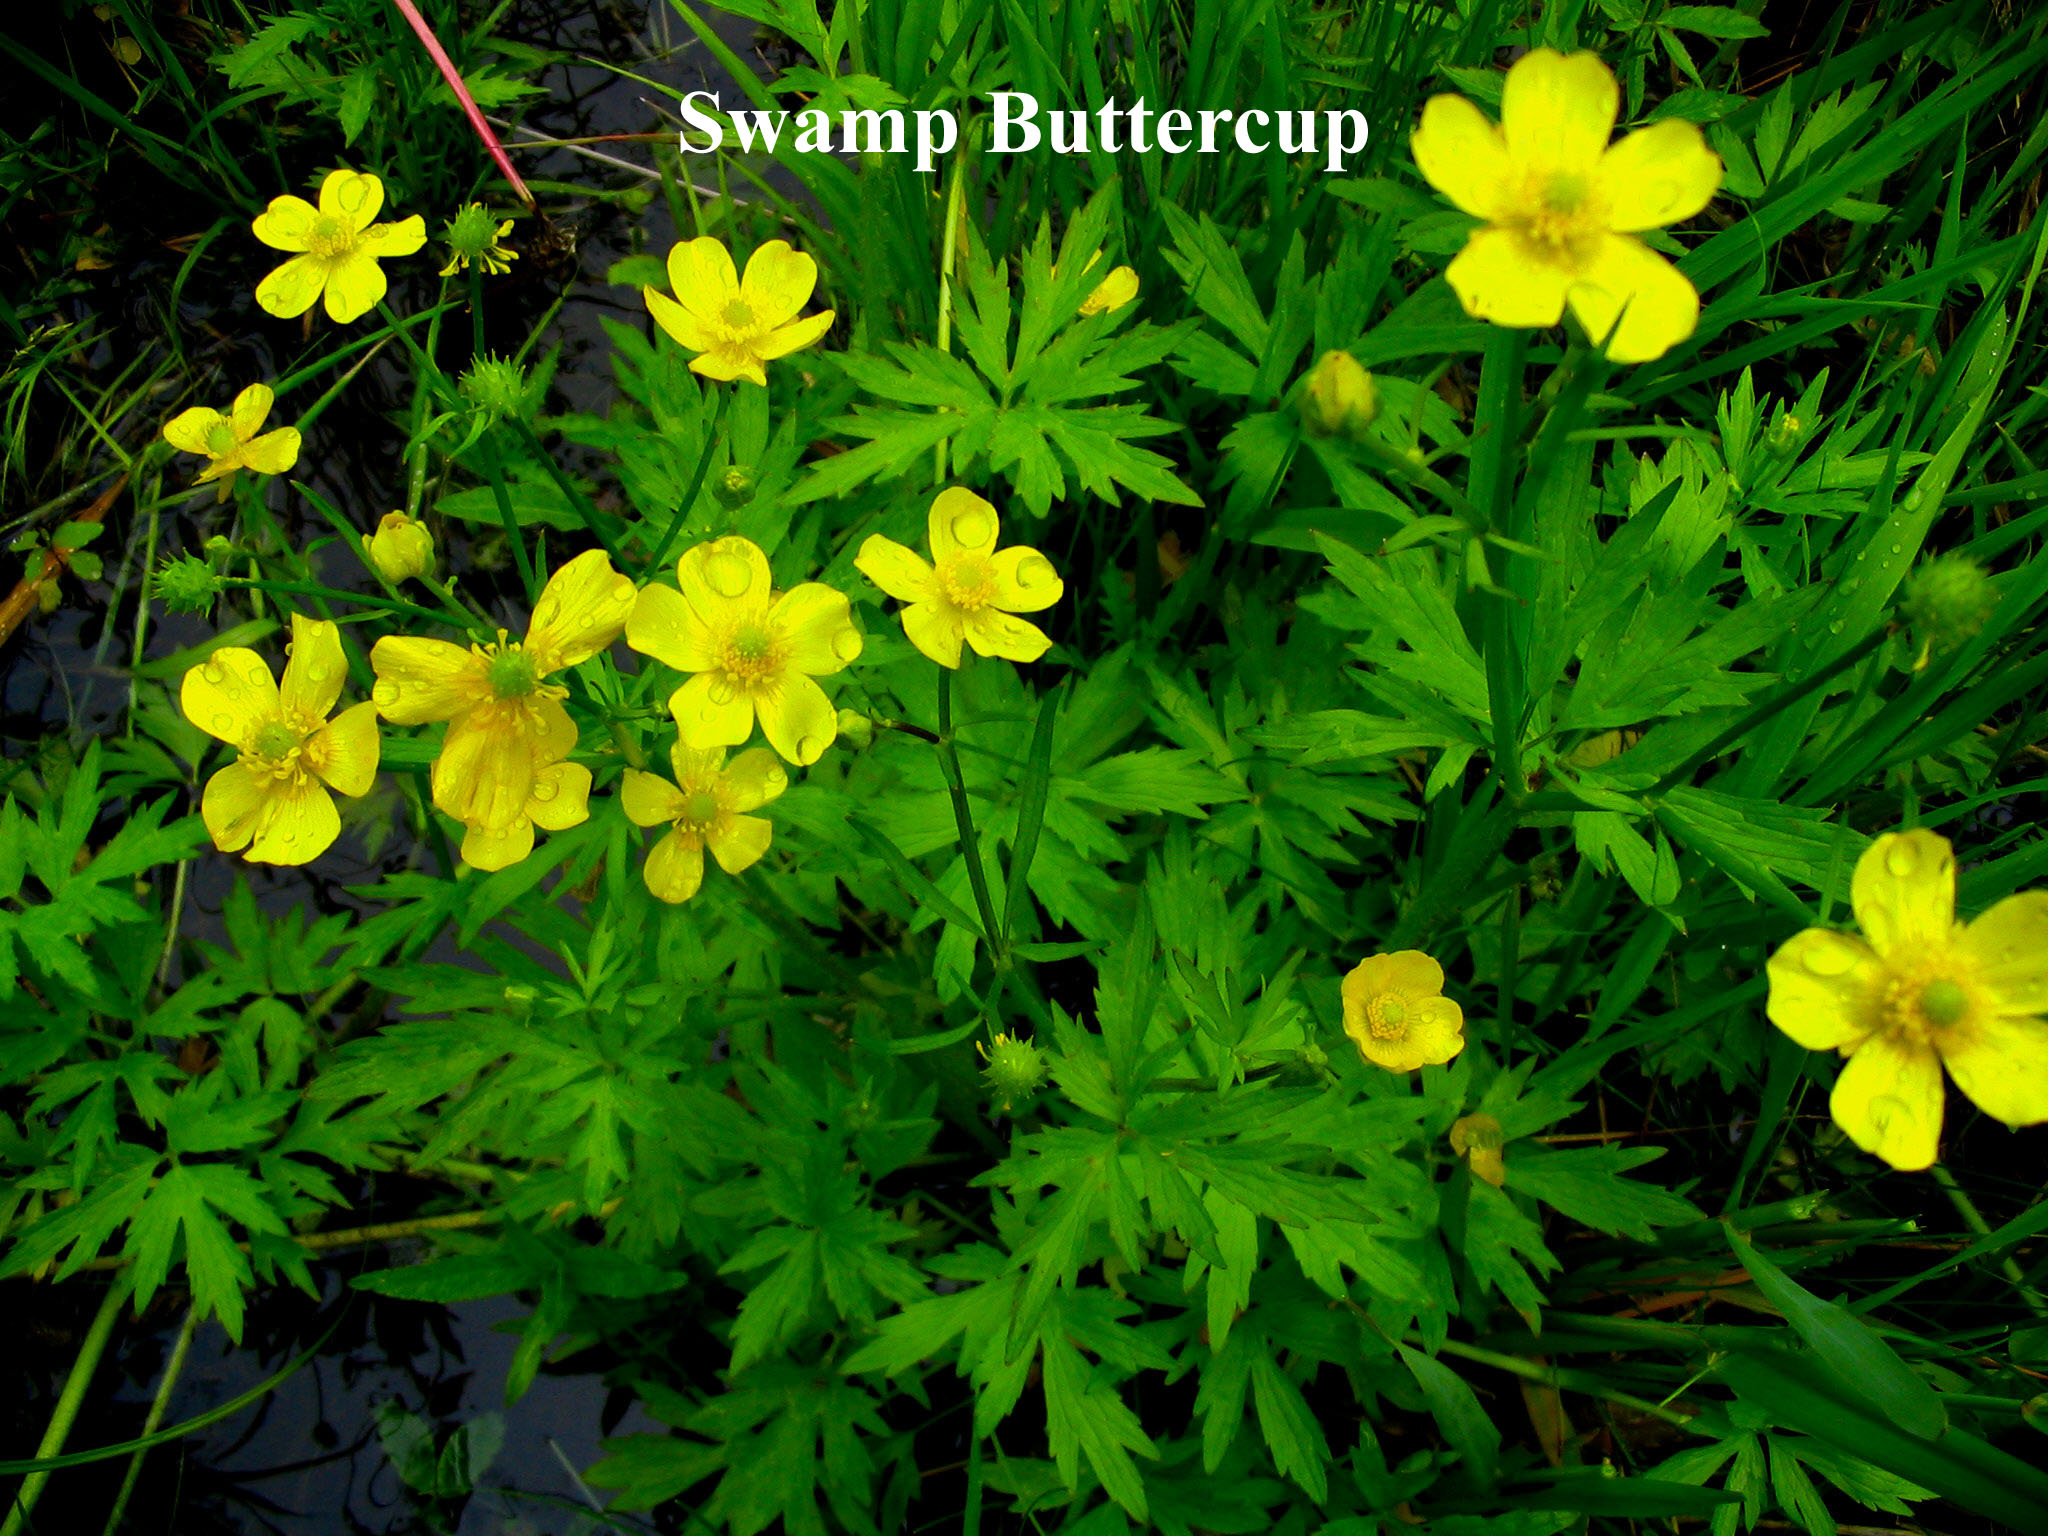 Swamp Buttercup